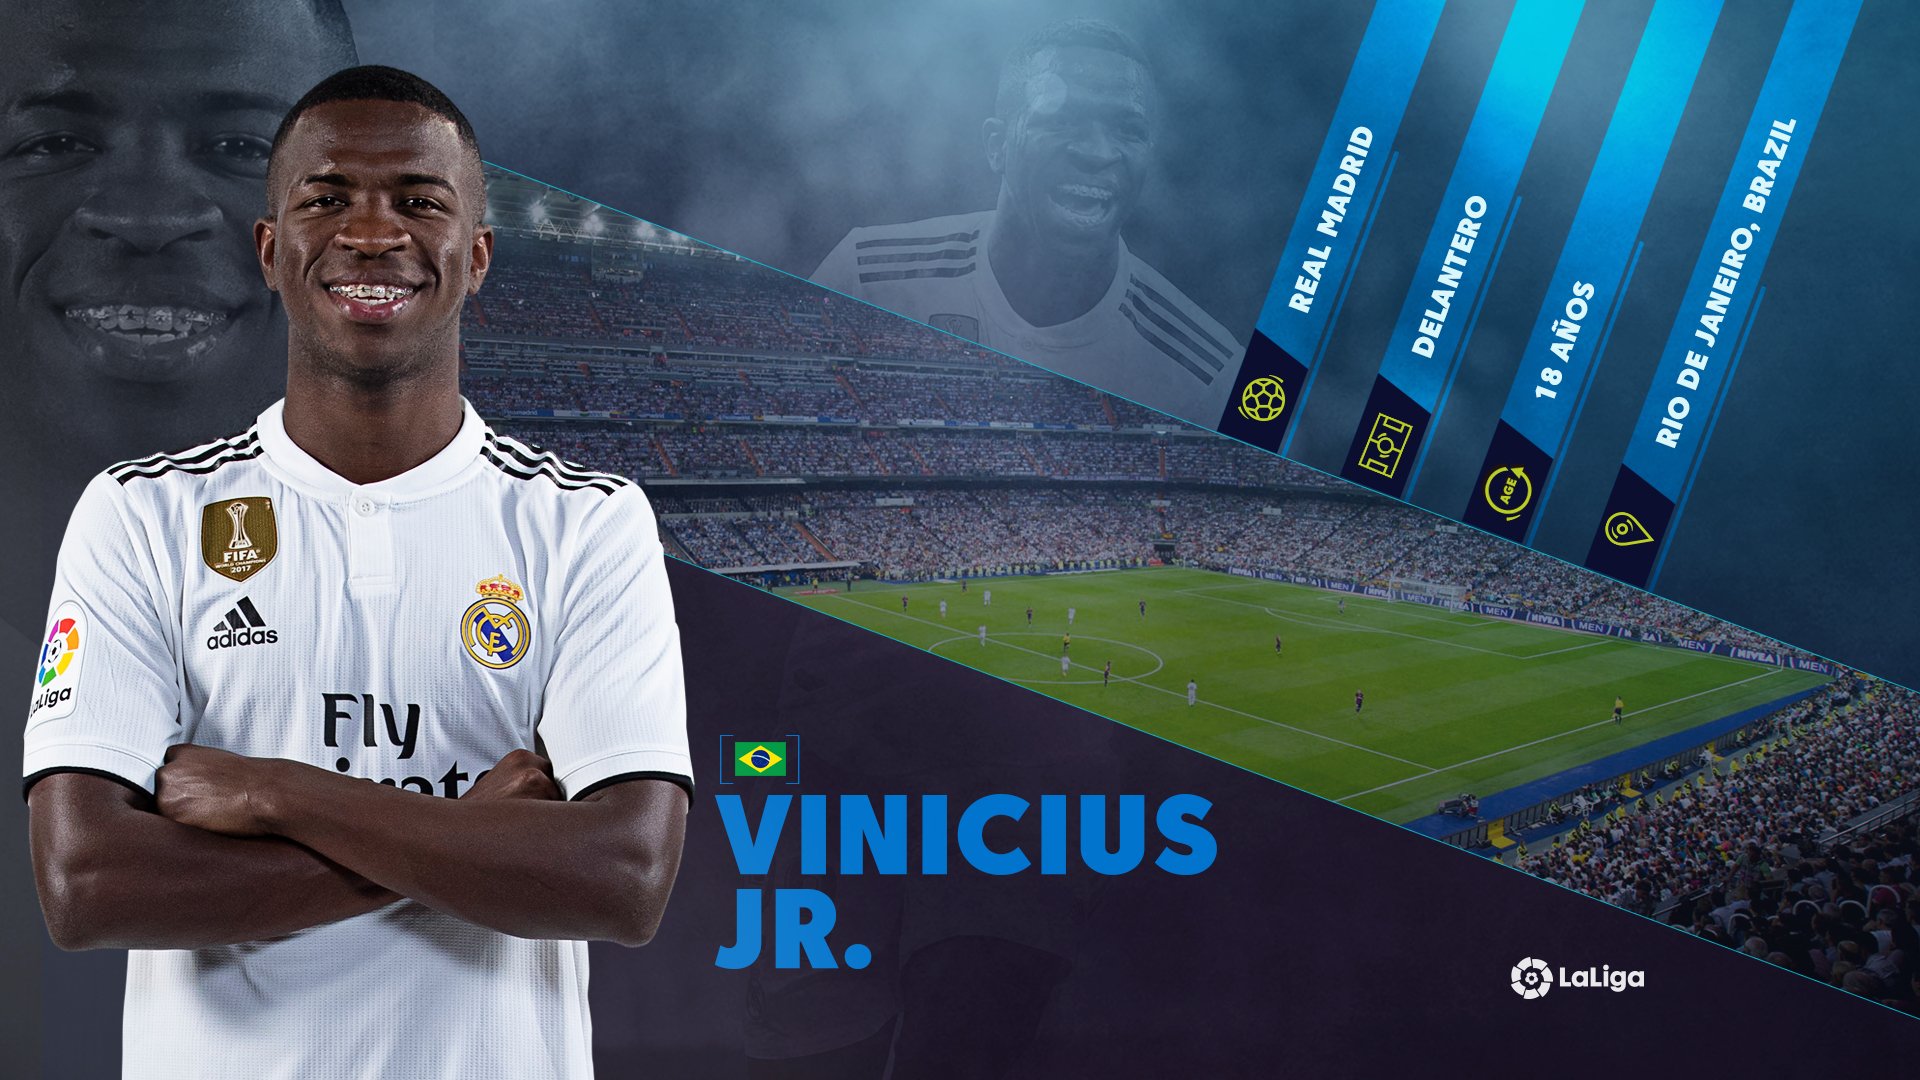 LaLiga's rising stars: Vinicius Jr